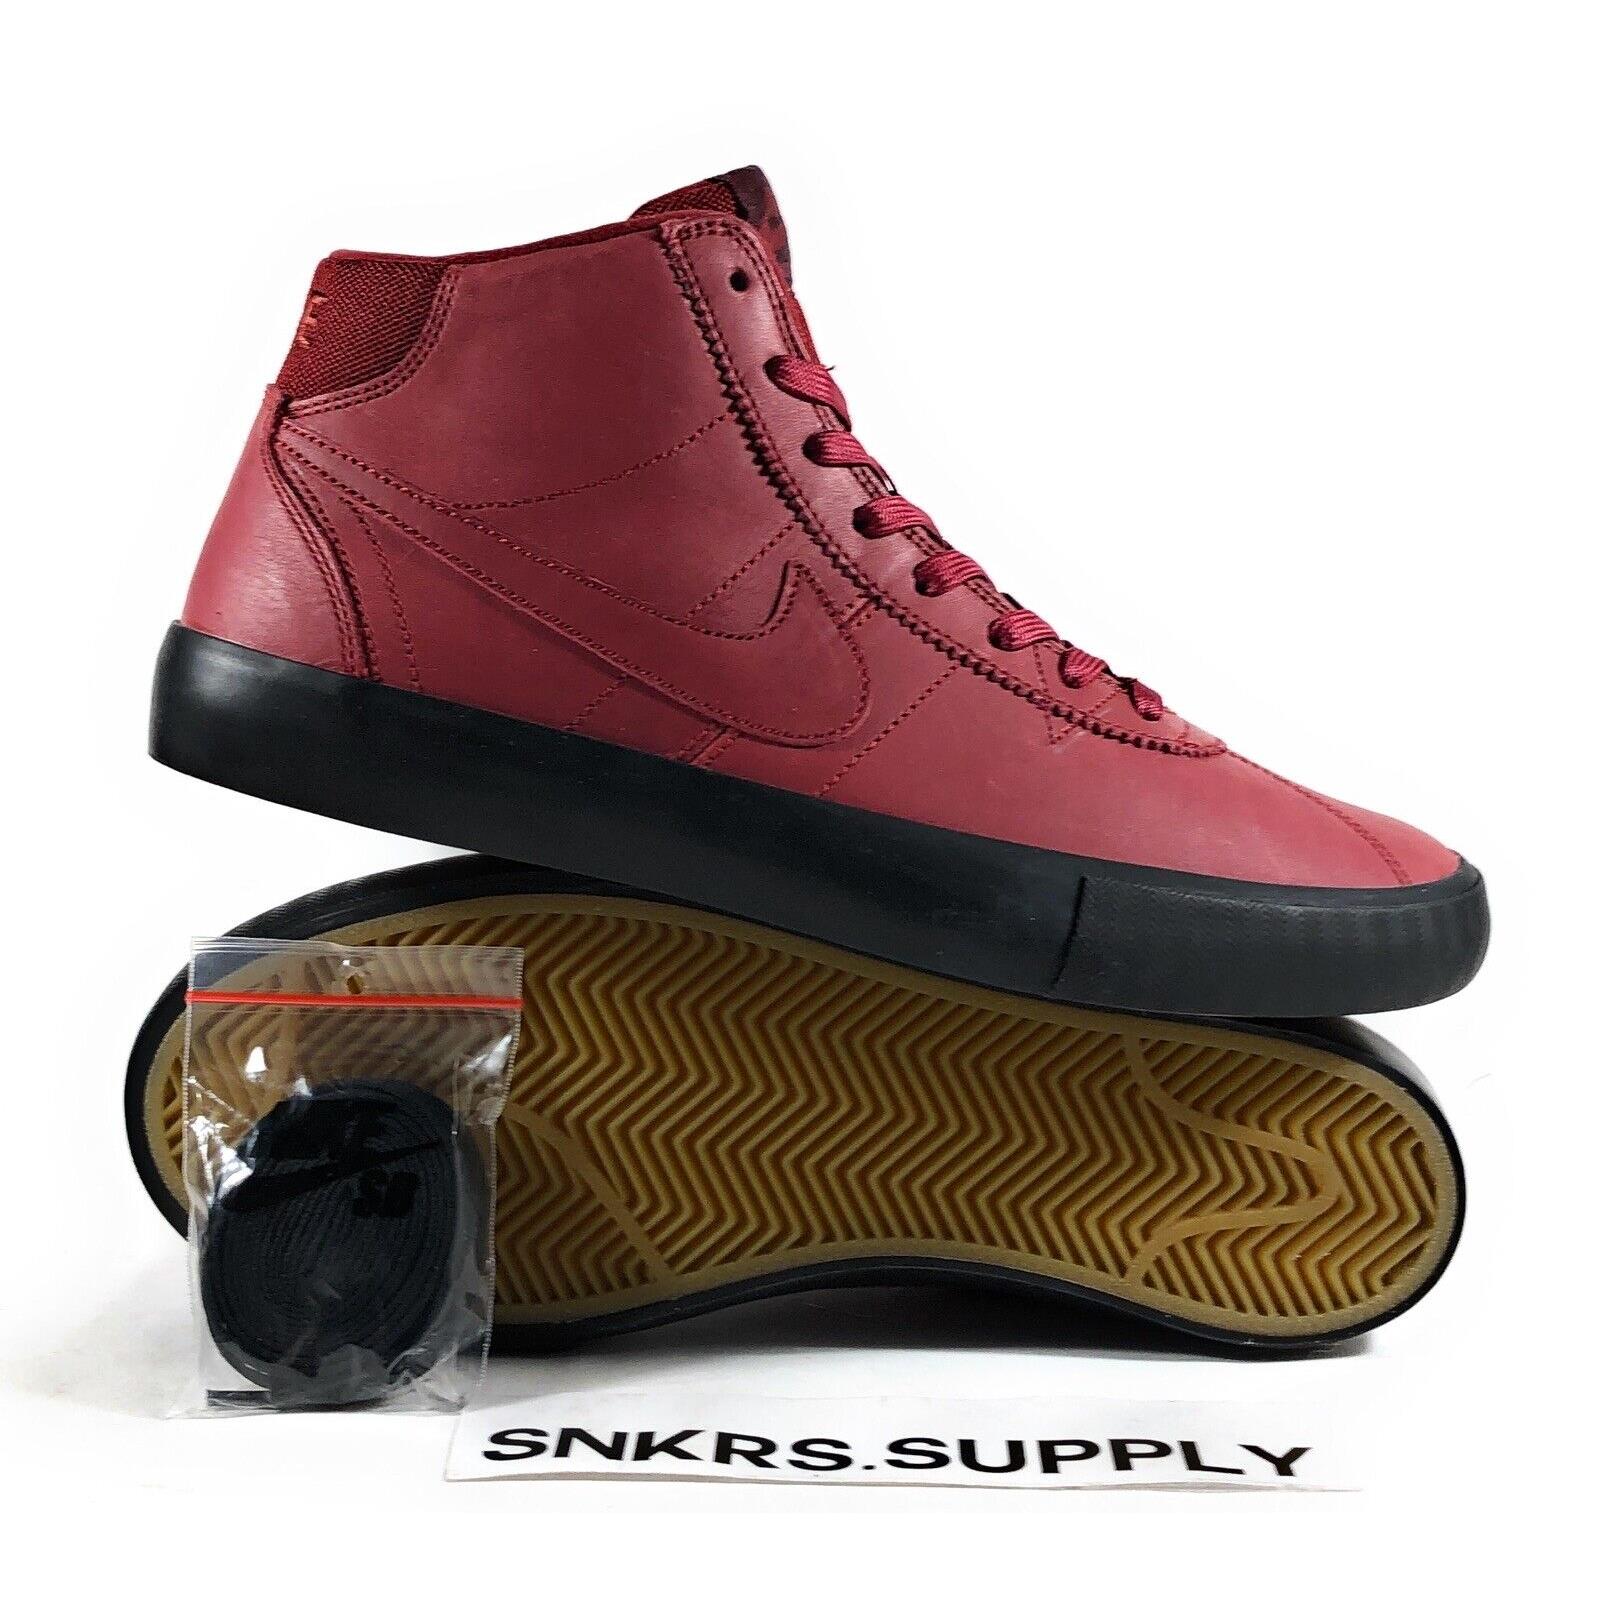 Nike shoes Bruin - Team Red, Night Maroon, Black , Team Red / Night Maroon / Black Manufacturer 2